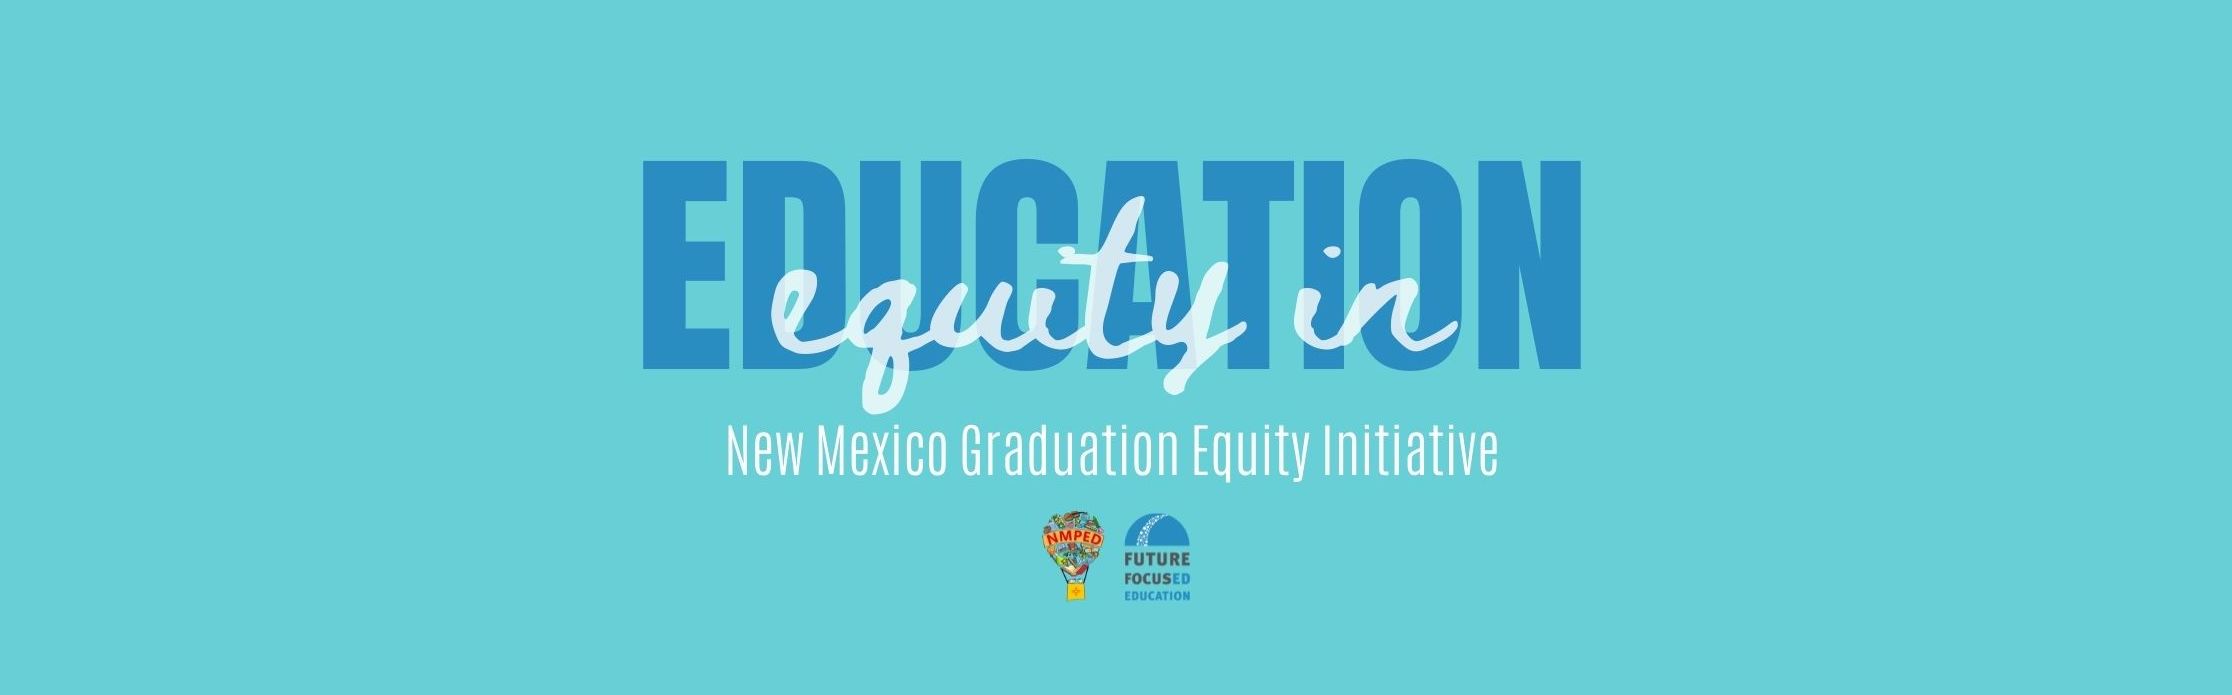 NM Graduation Equity Initiative graphic